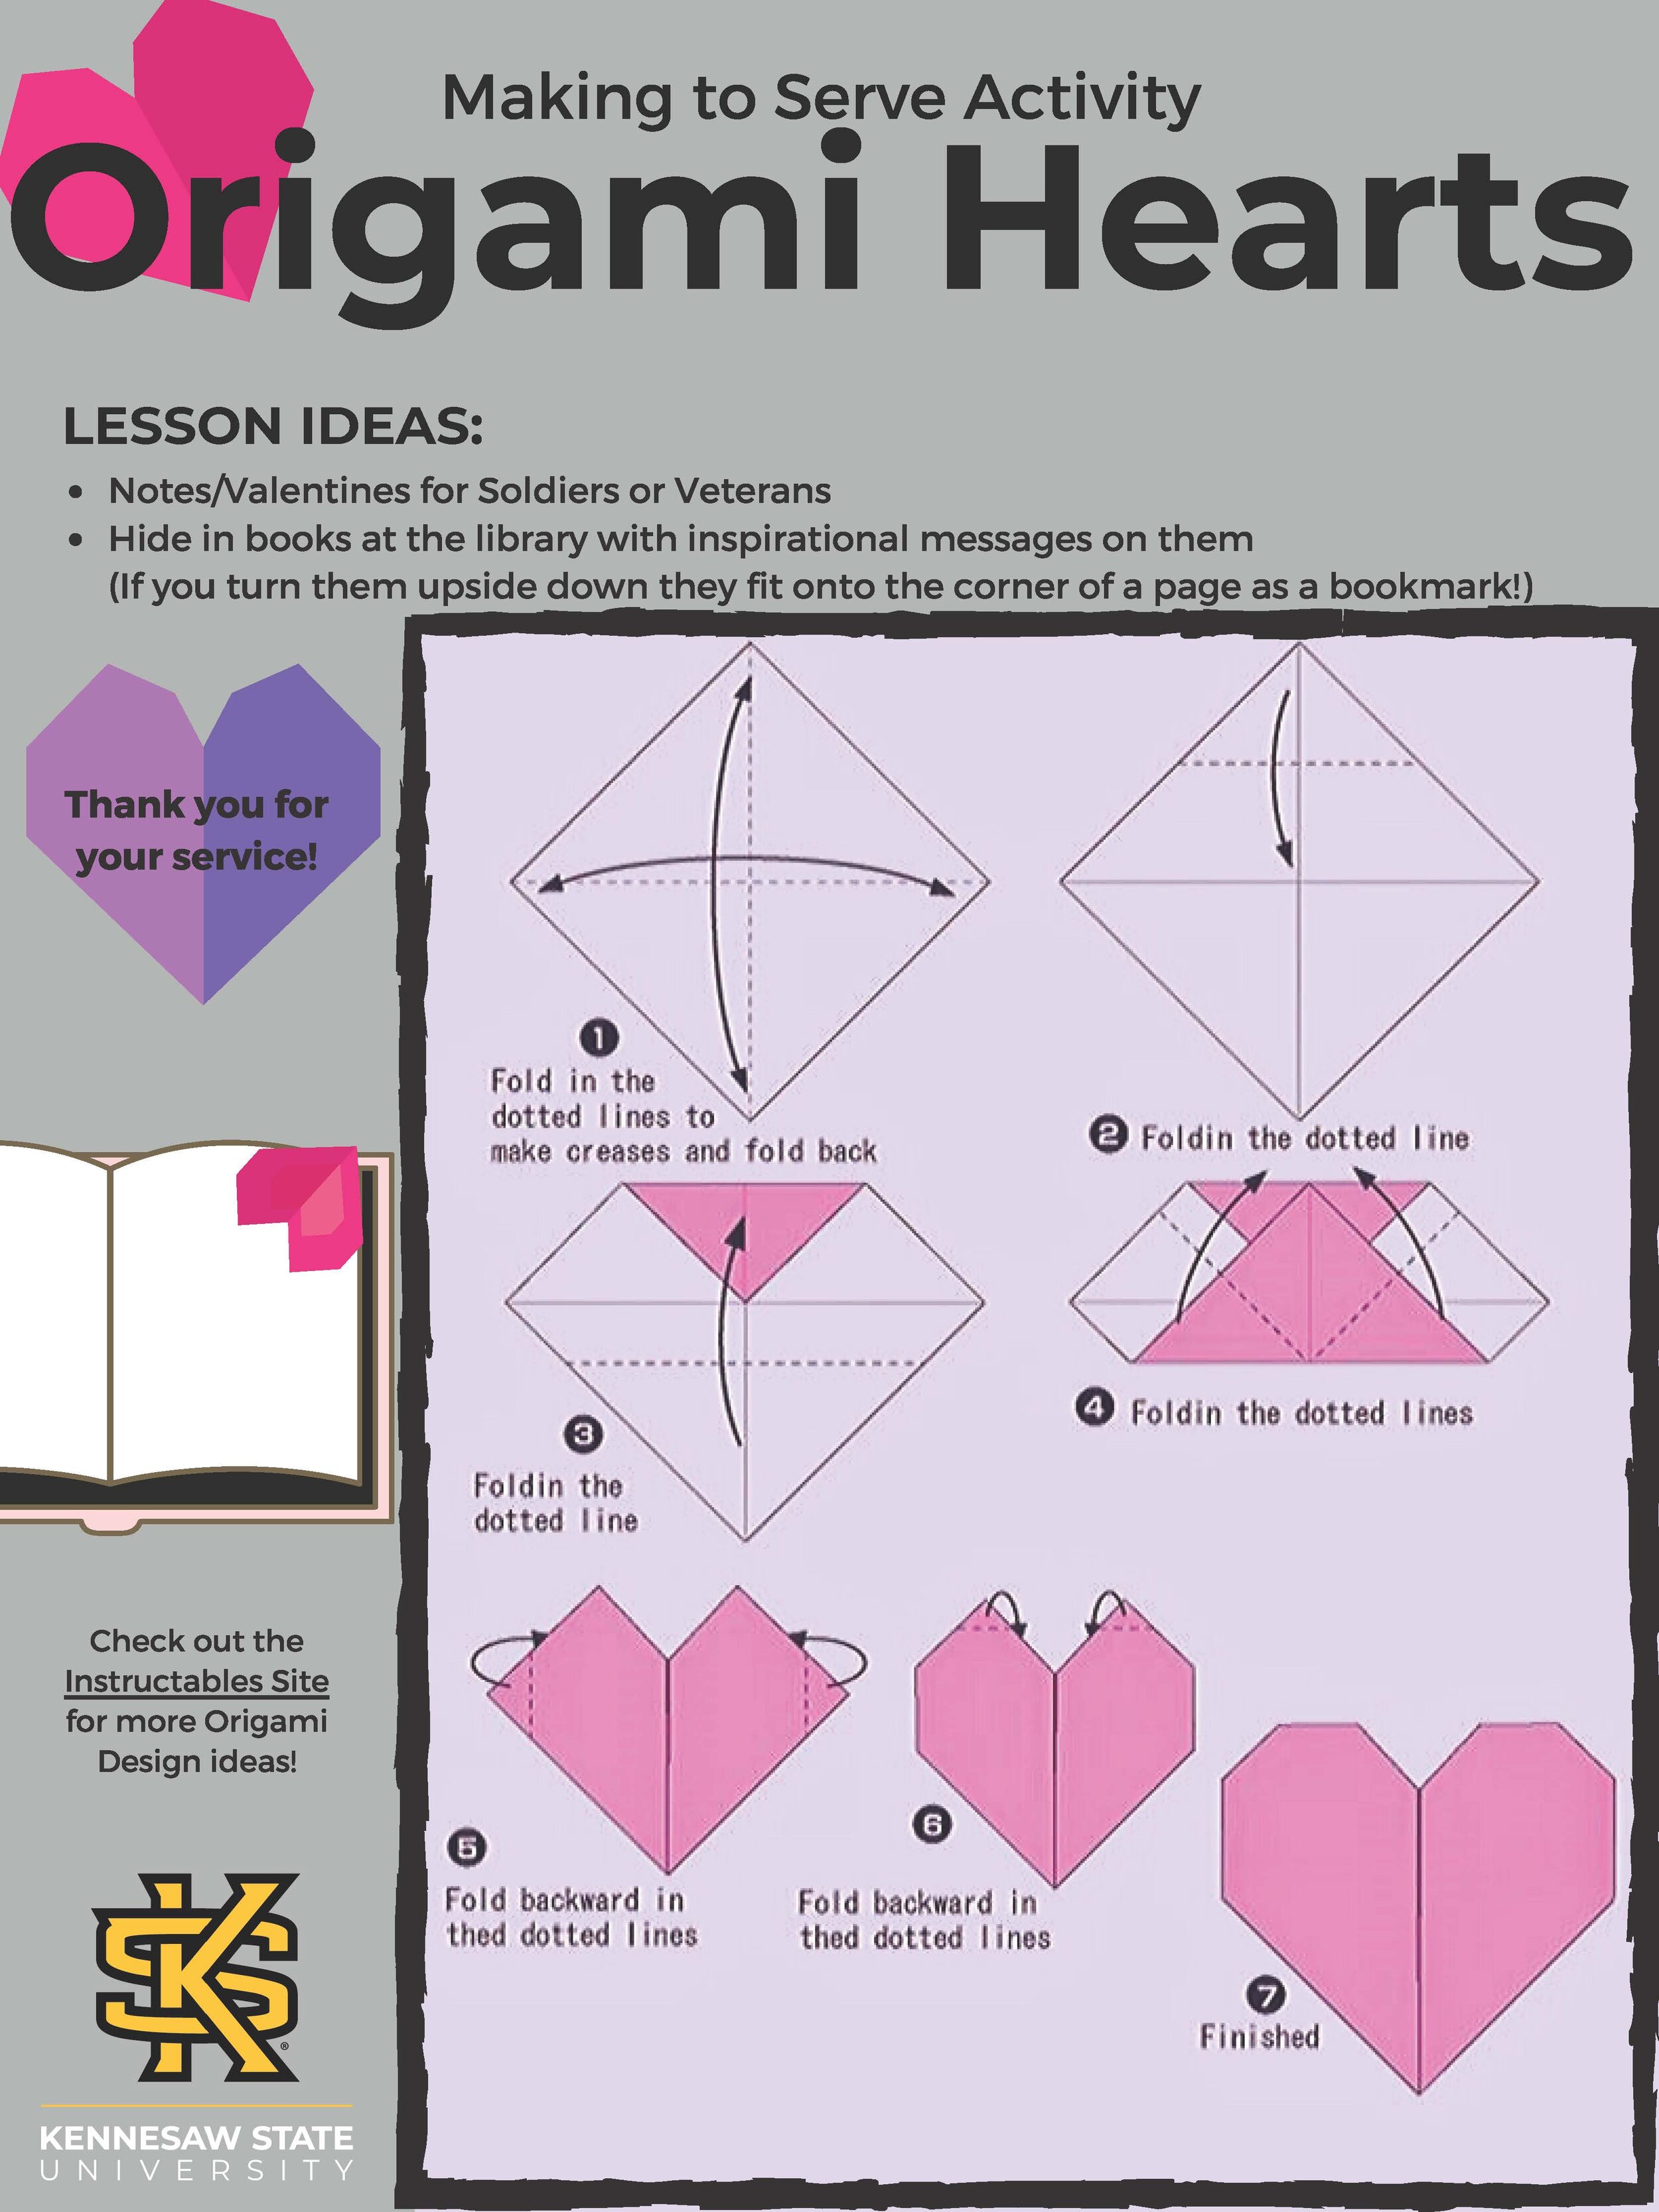 Origami Heart-Making to Serve.jpg